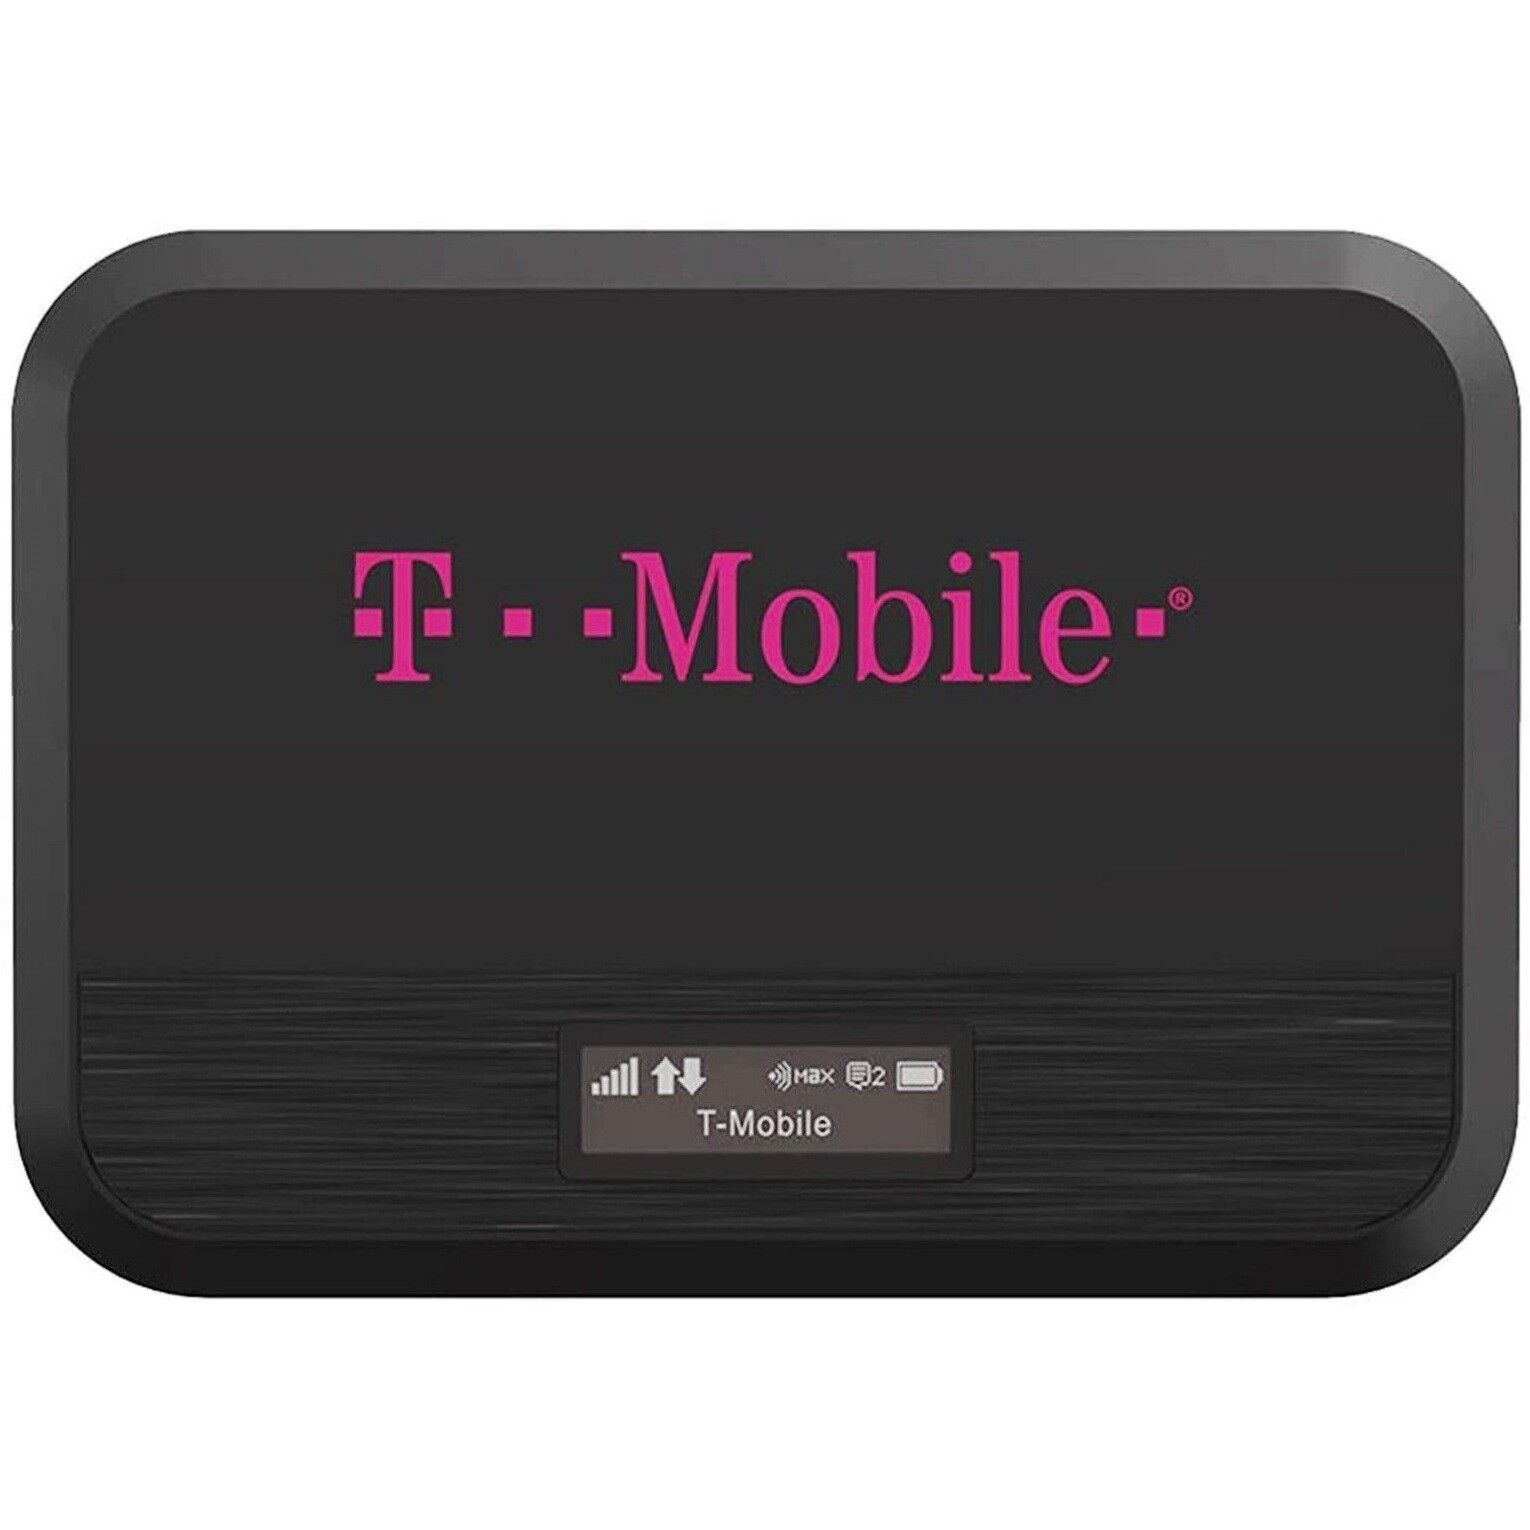 Franklin T9 RT717 - Black (T-Mobile) 4G LTE GSM Mobile WiFi Hotspot Router Modem